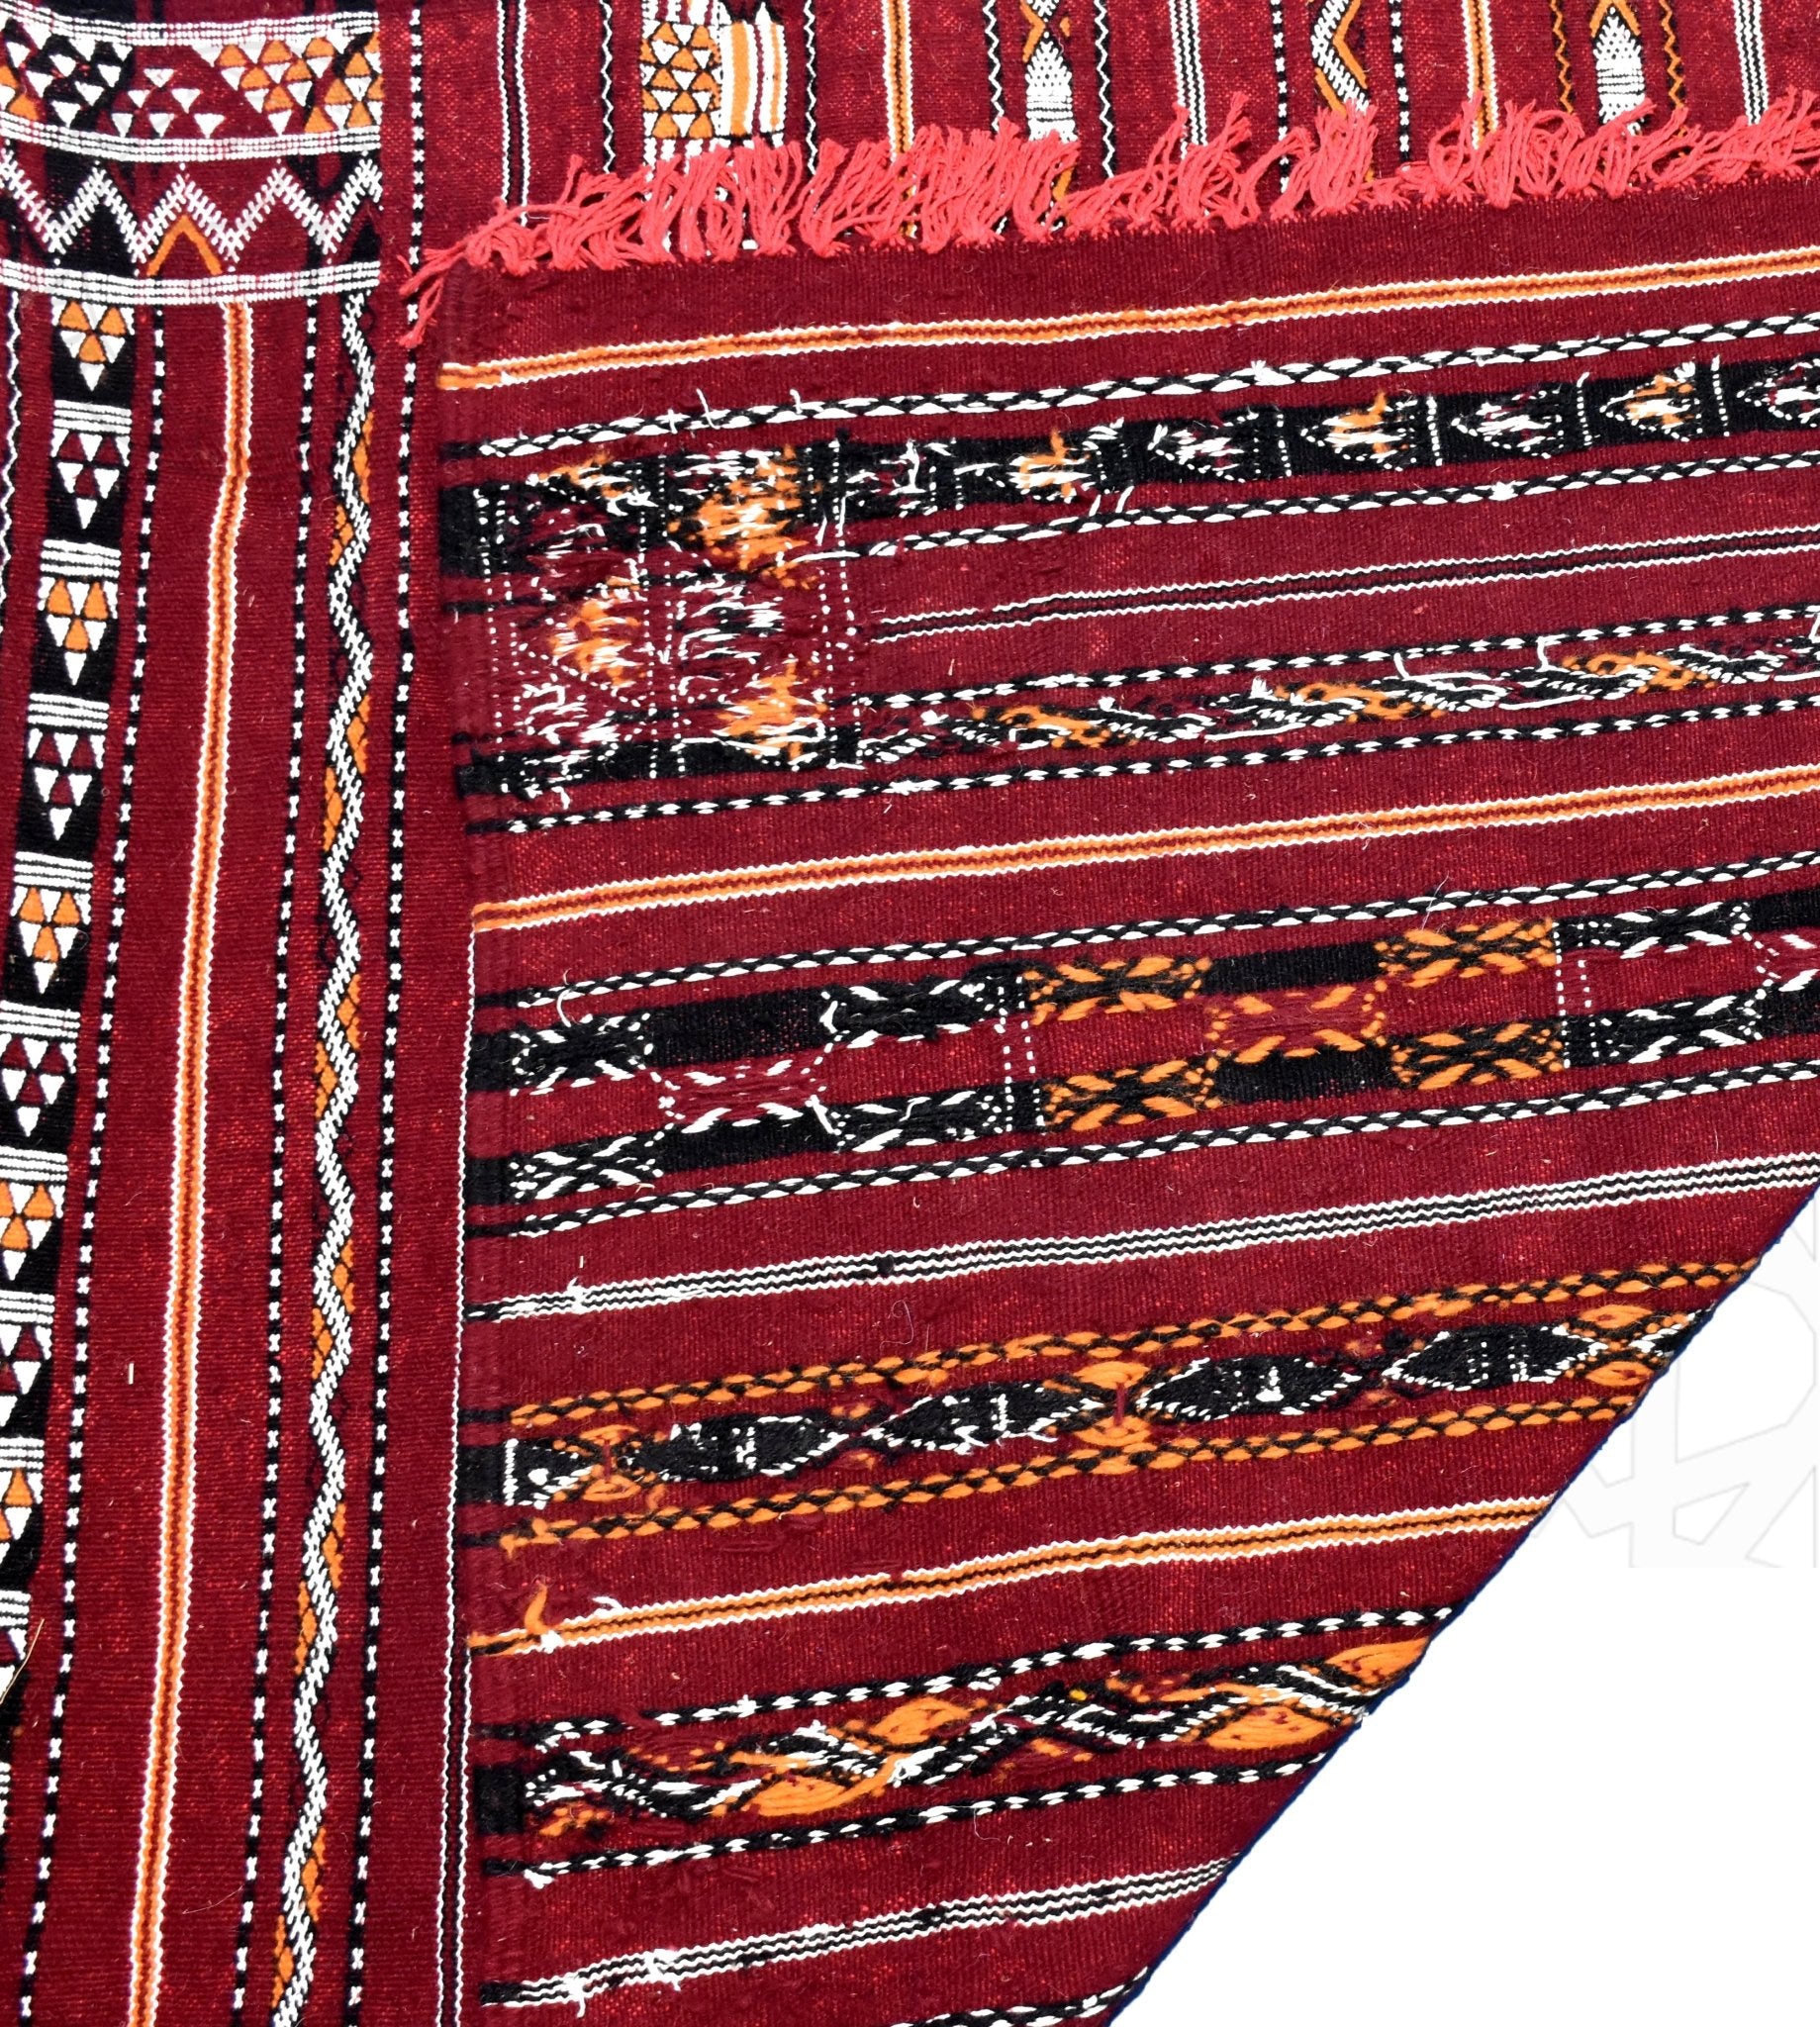 Flatweave kilim hanbal Moroccan rug - 3.61 x 7.9 ft / 110 x 240 cm - Berbers Market